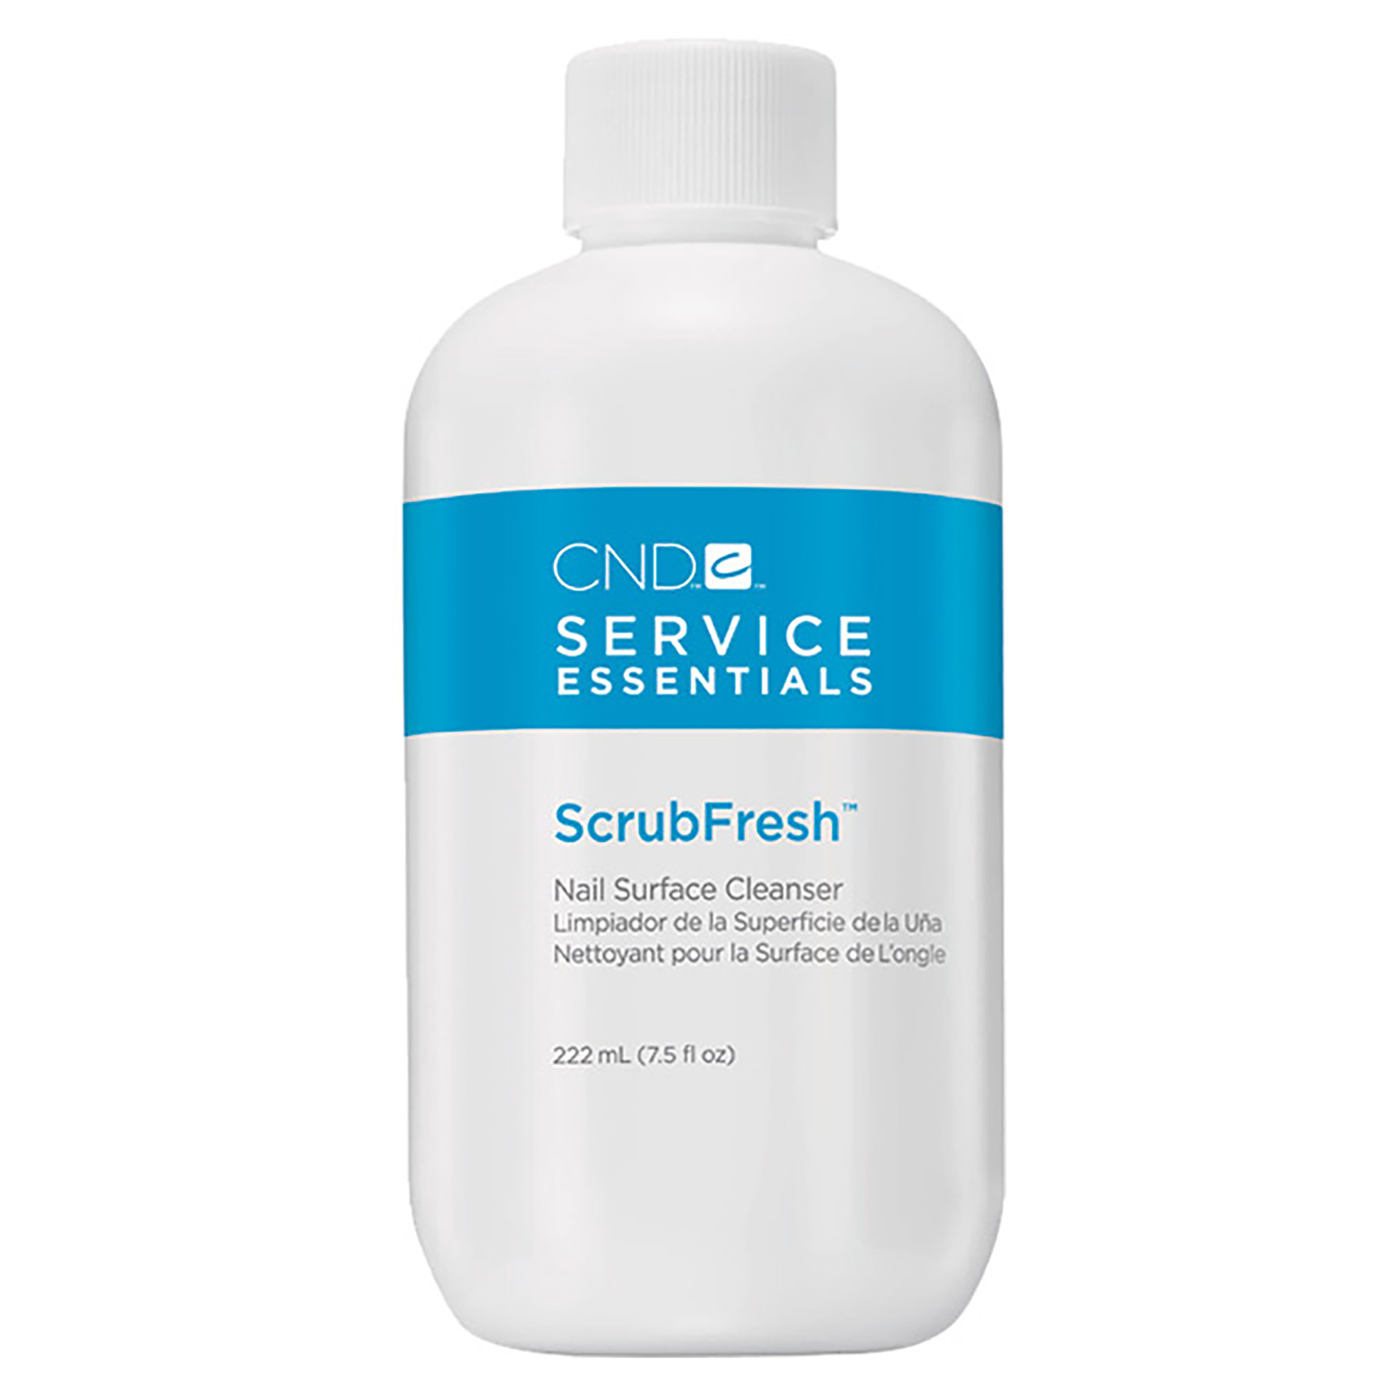 ScrubFresh™ Nail Surface Cleanser